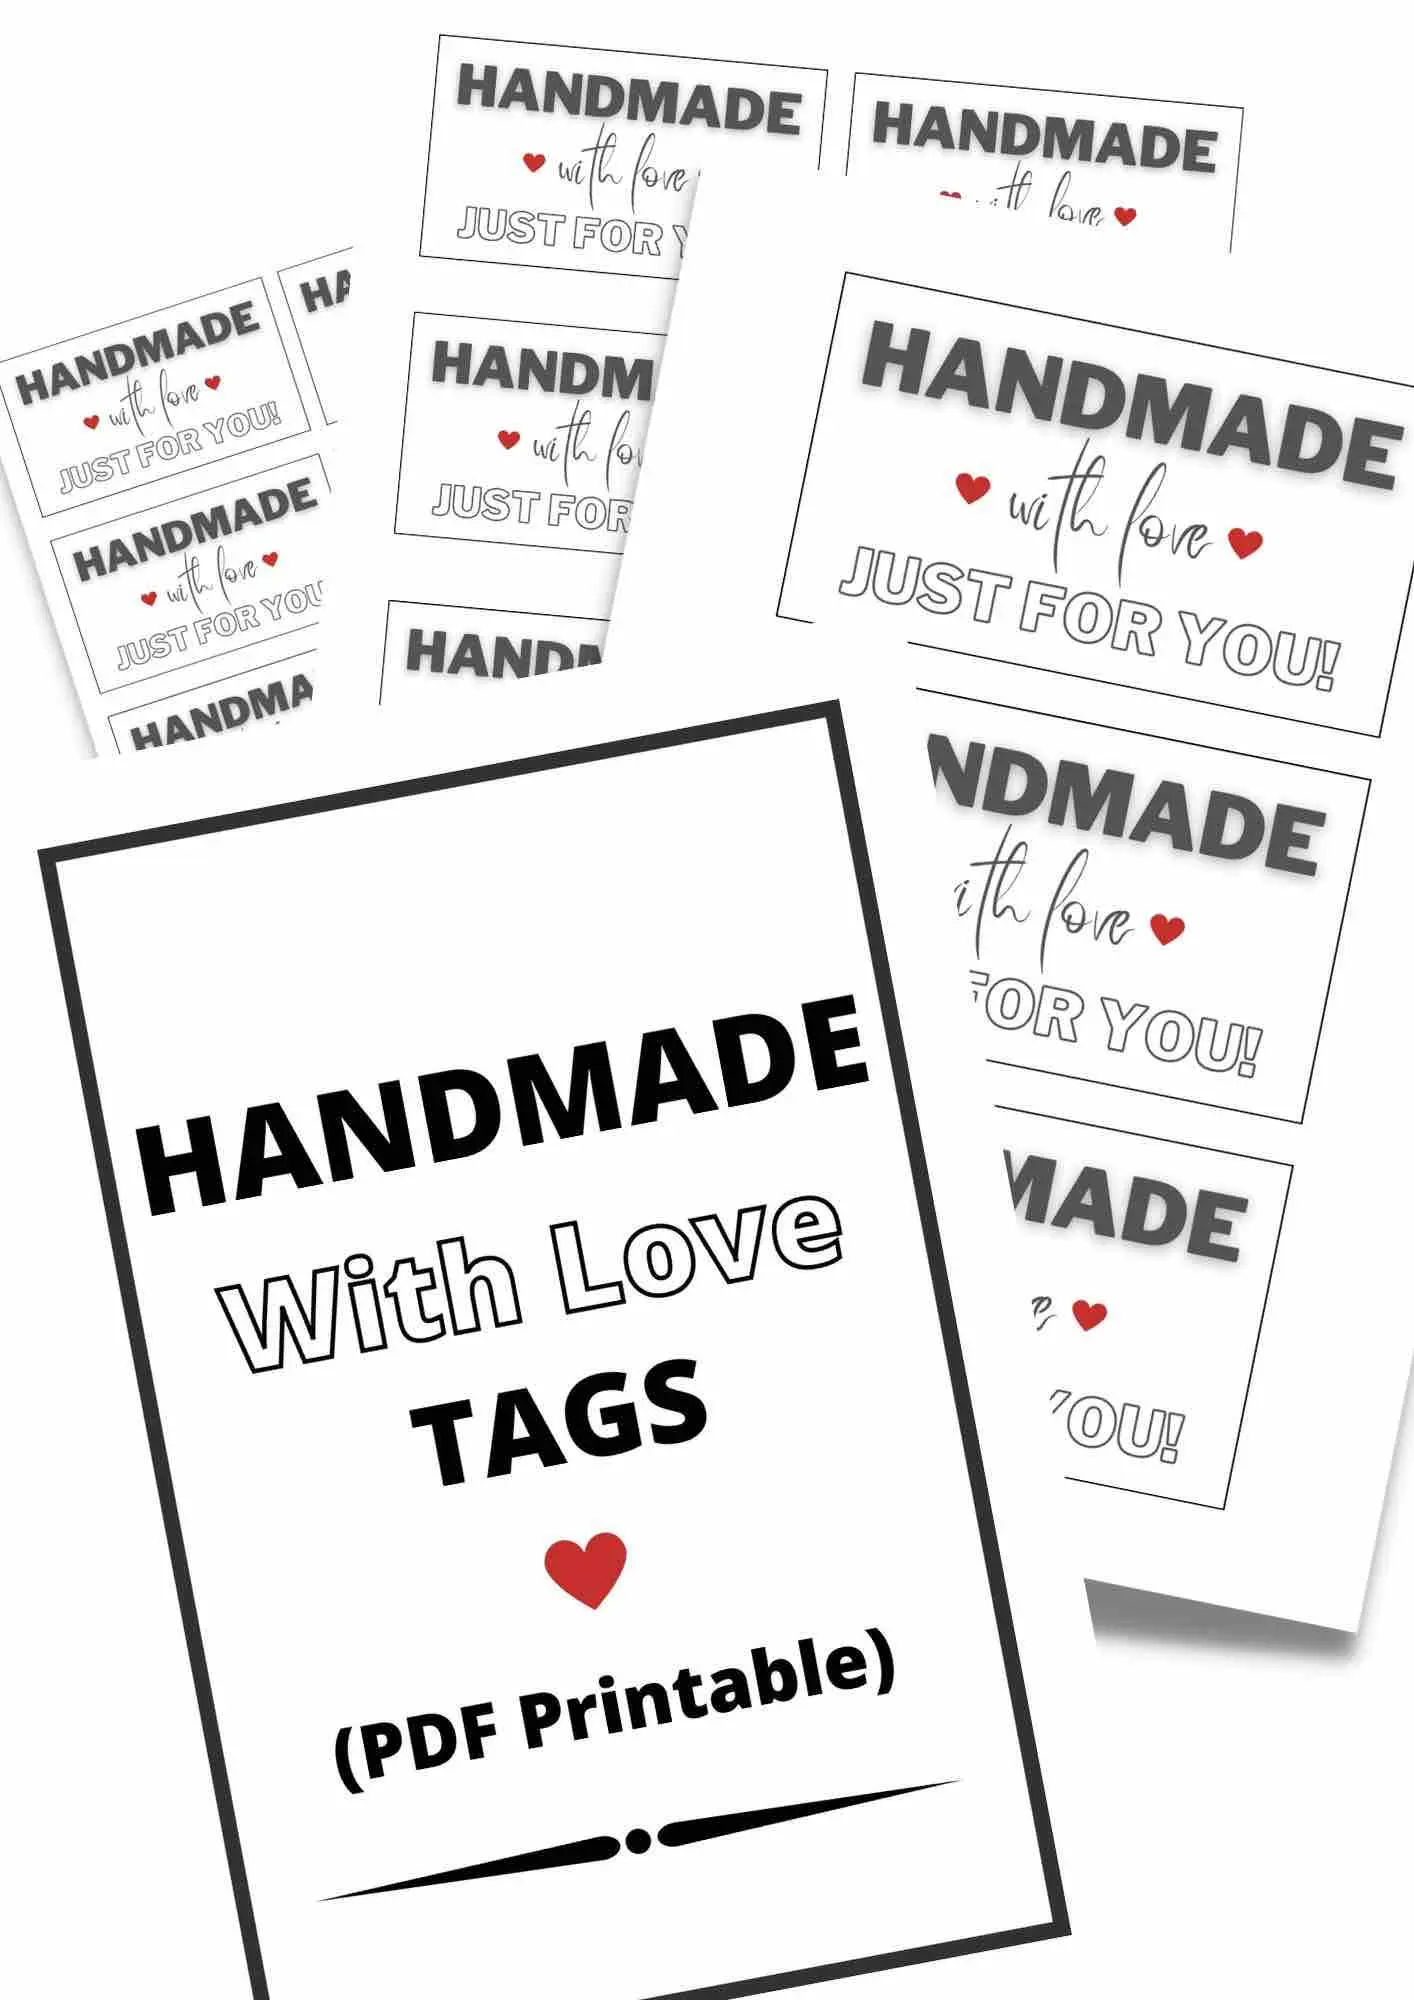 Handmade-With-Love-Tags-PDF-Printable.